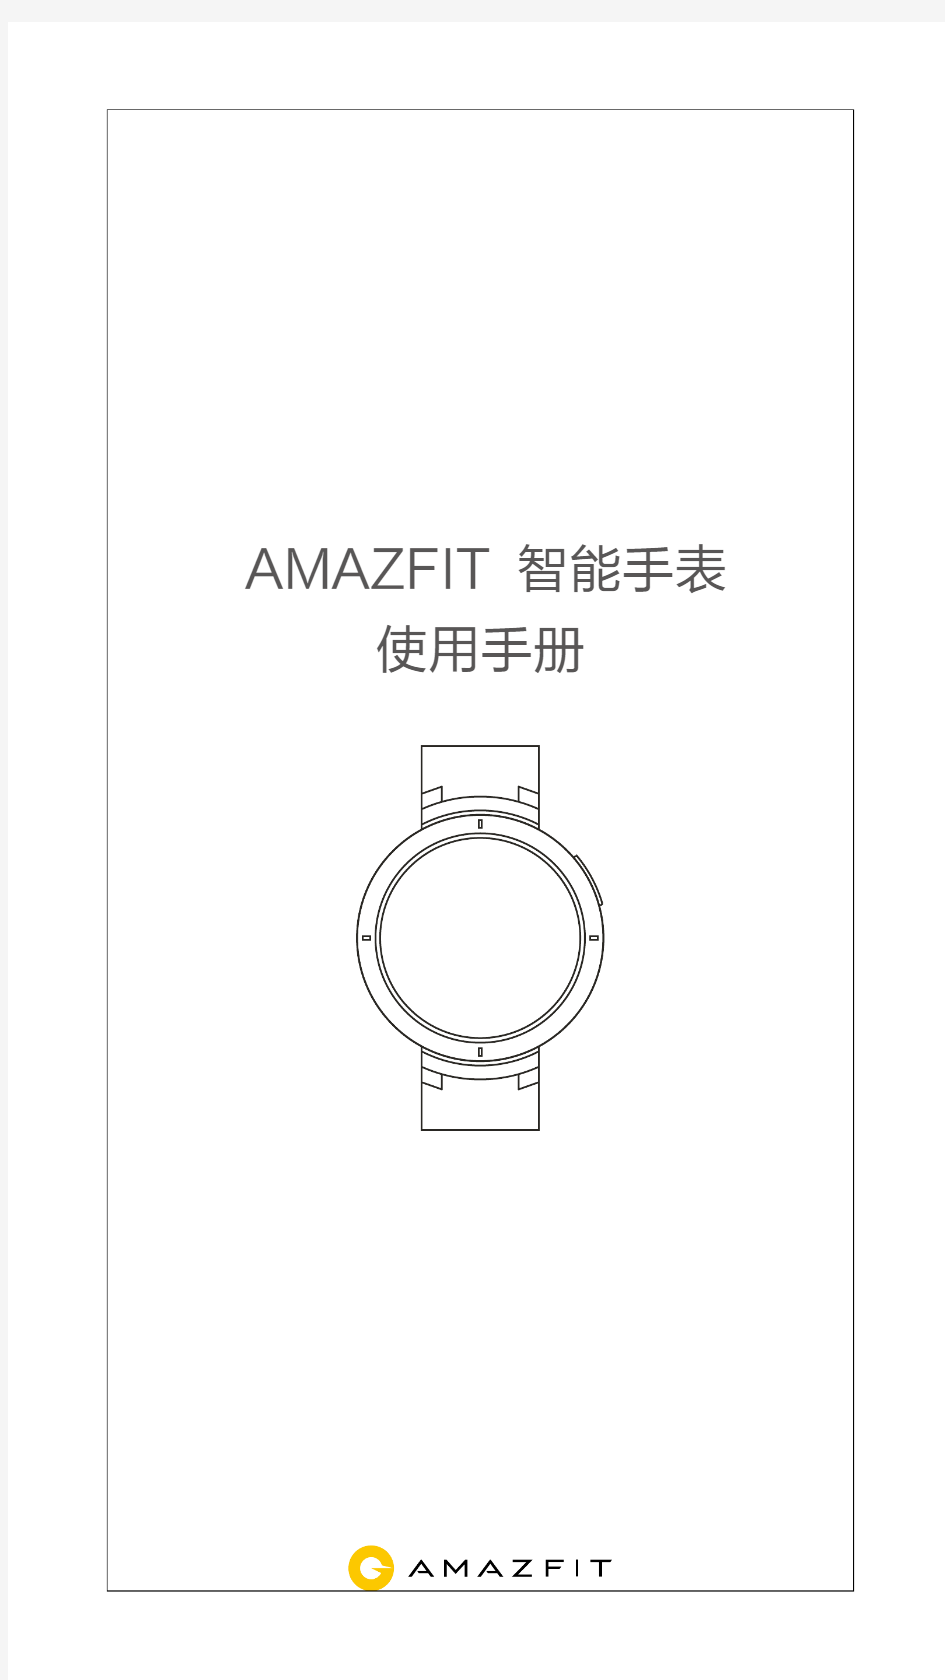 AMAZFIT智能手表使用手册